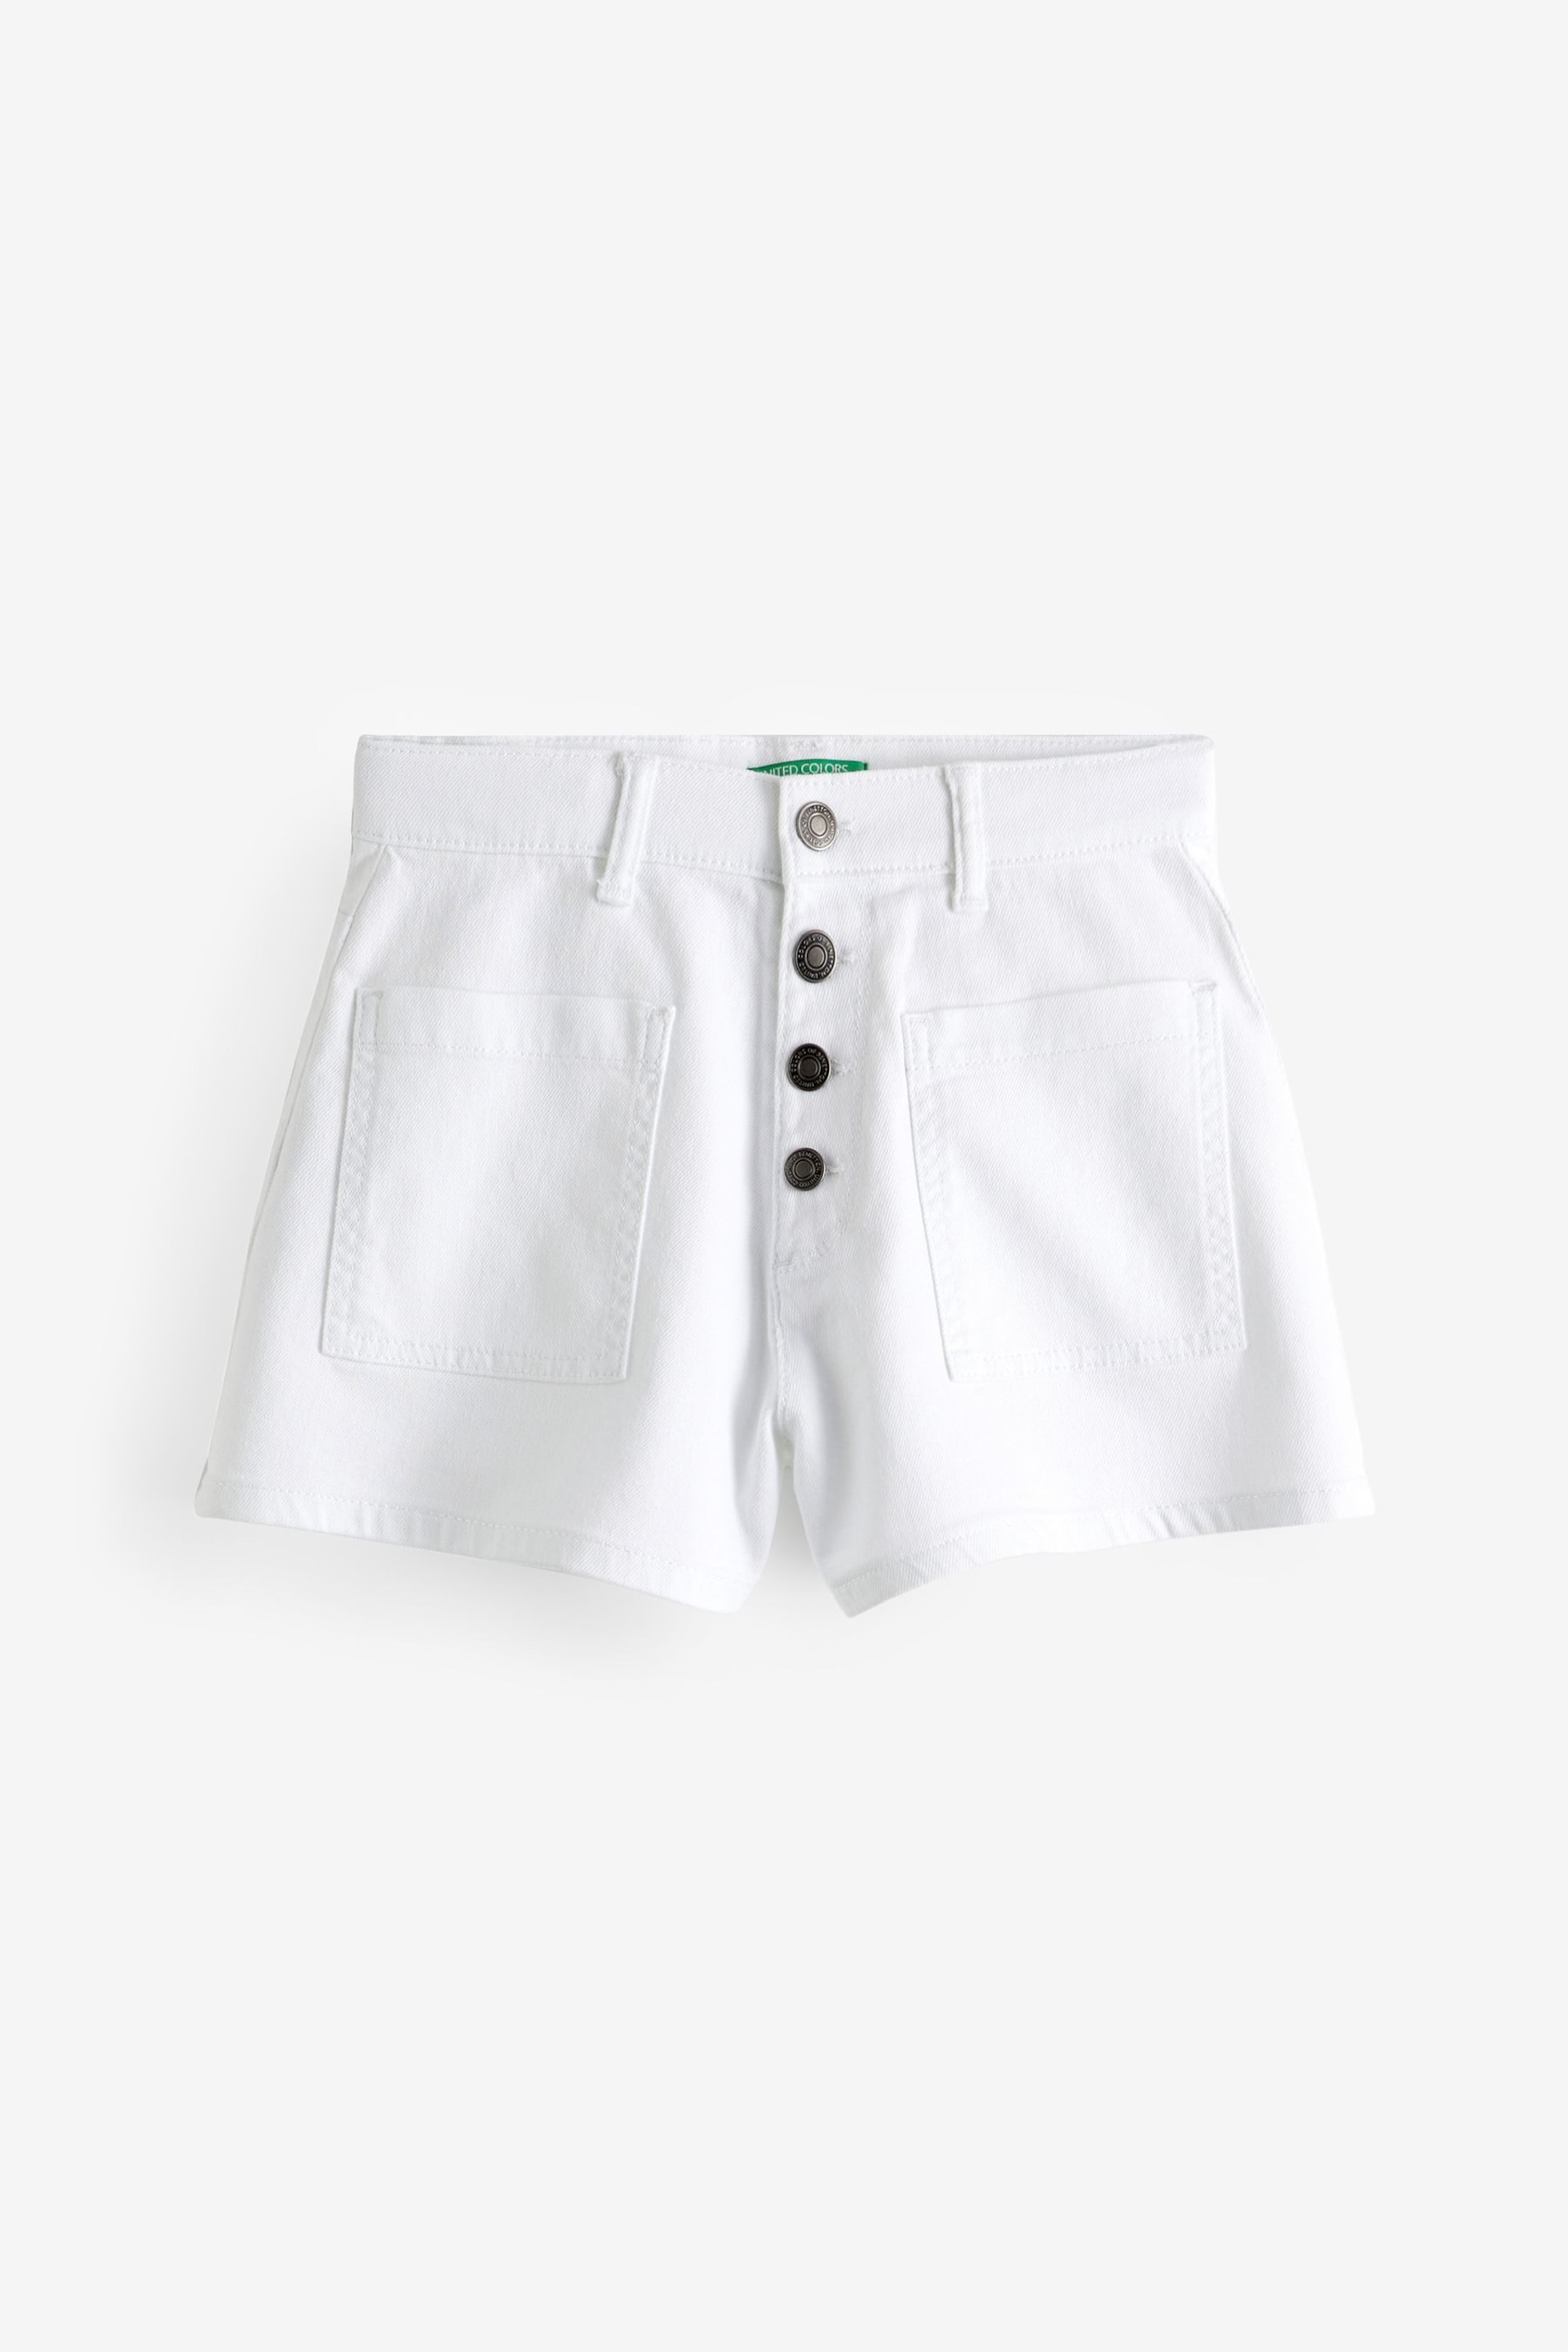 Benetton Girls Cream Shorts - Image 1 of 3